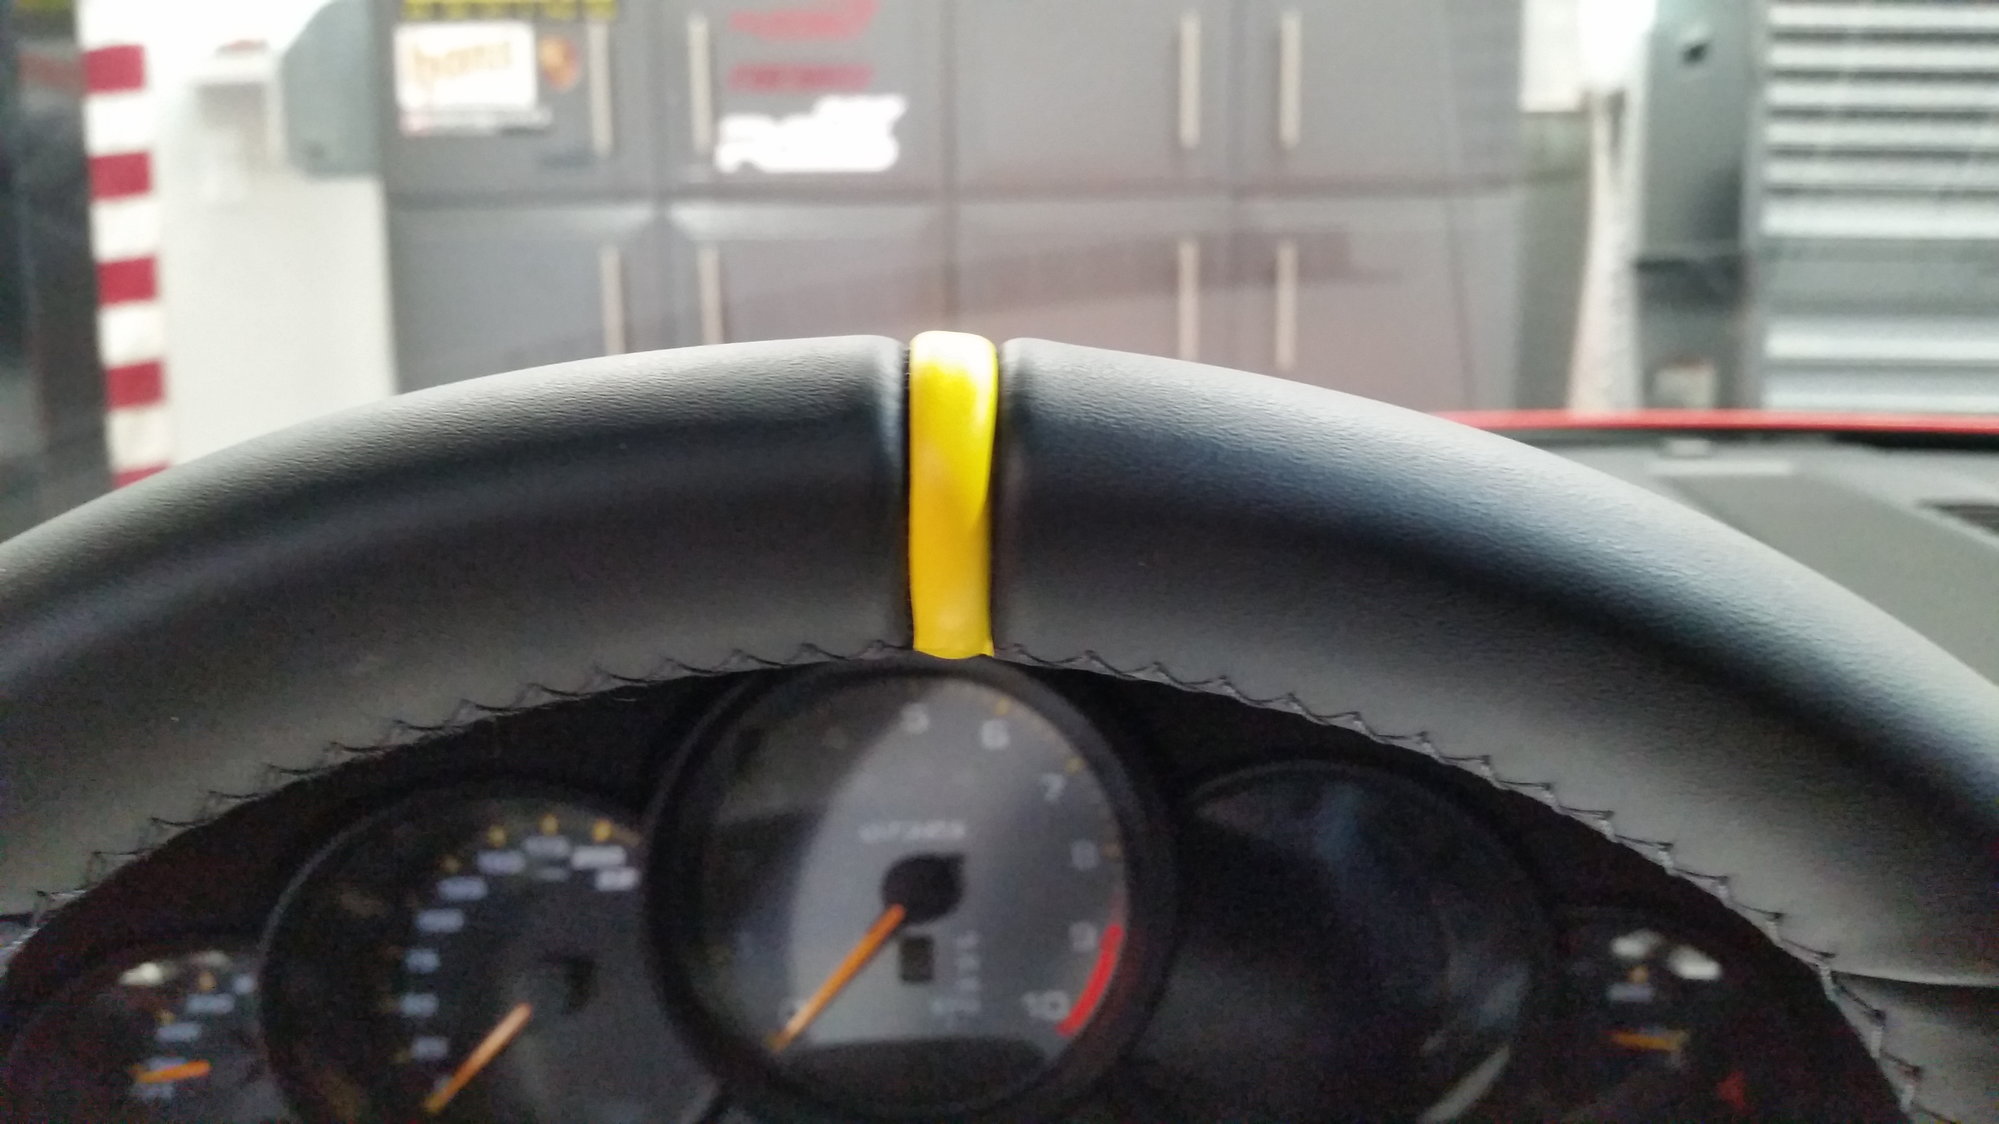 Steering wheel off center problem